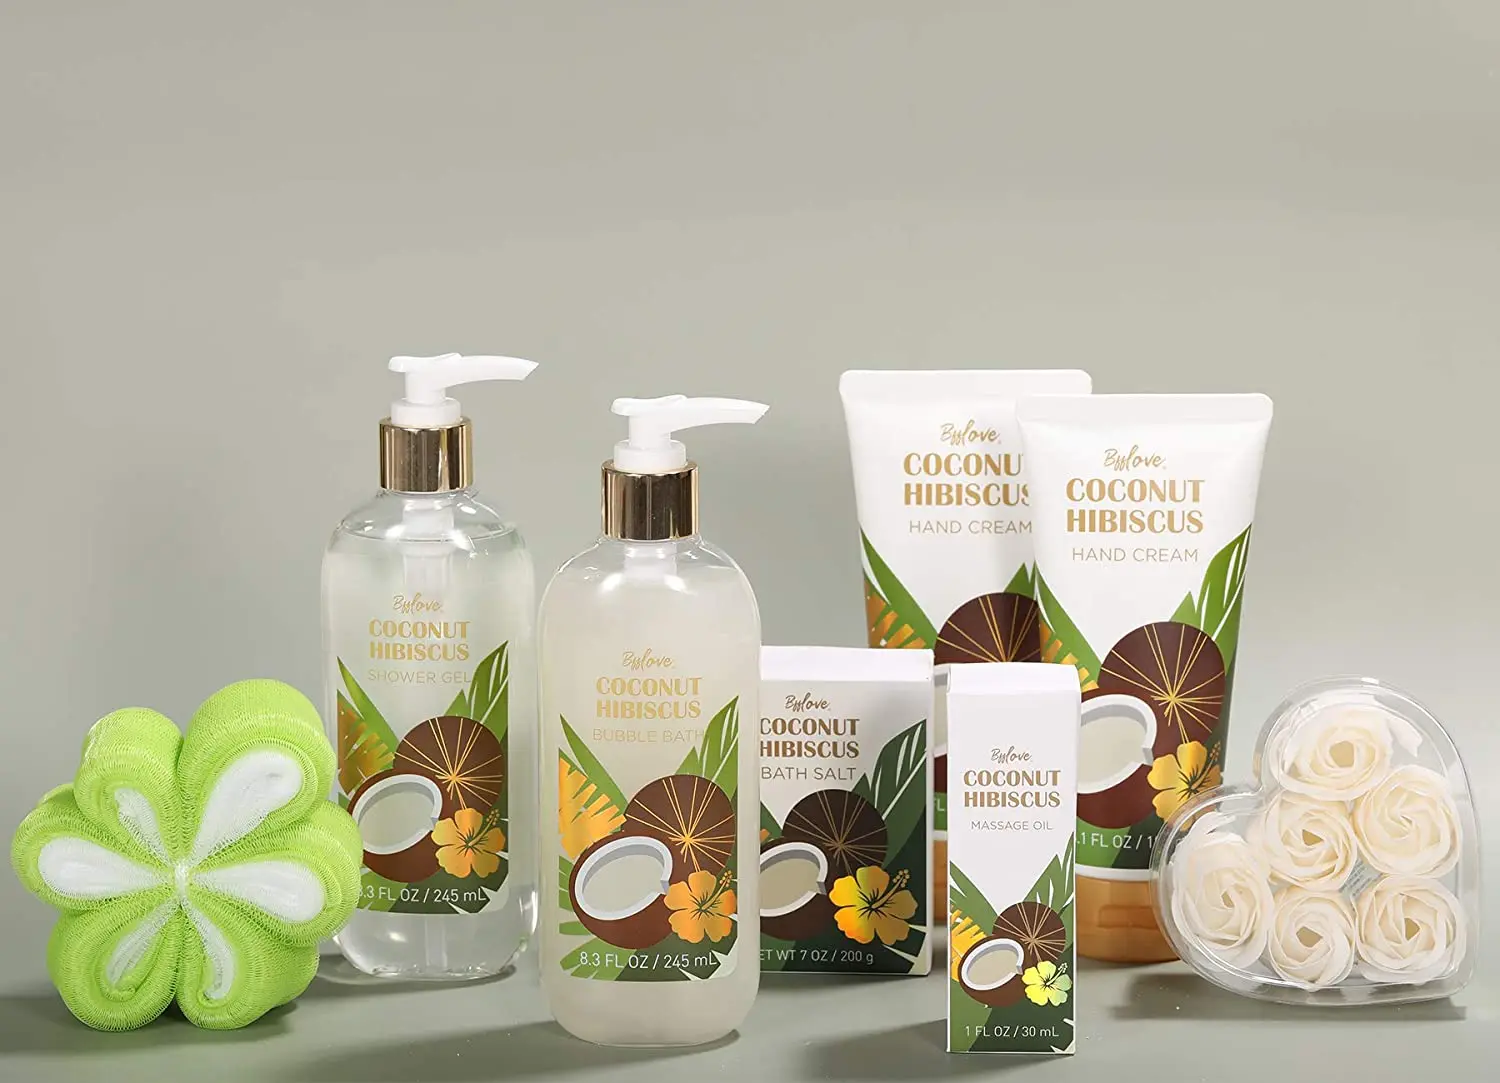 Yoni Soap - Coconut & Hibiscus Scent Spa Gift Basket, Home Bath and Body Gift Set with Massage Oil, Bubble Bath, Bath Salt